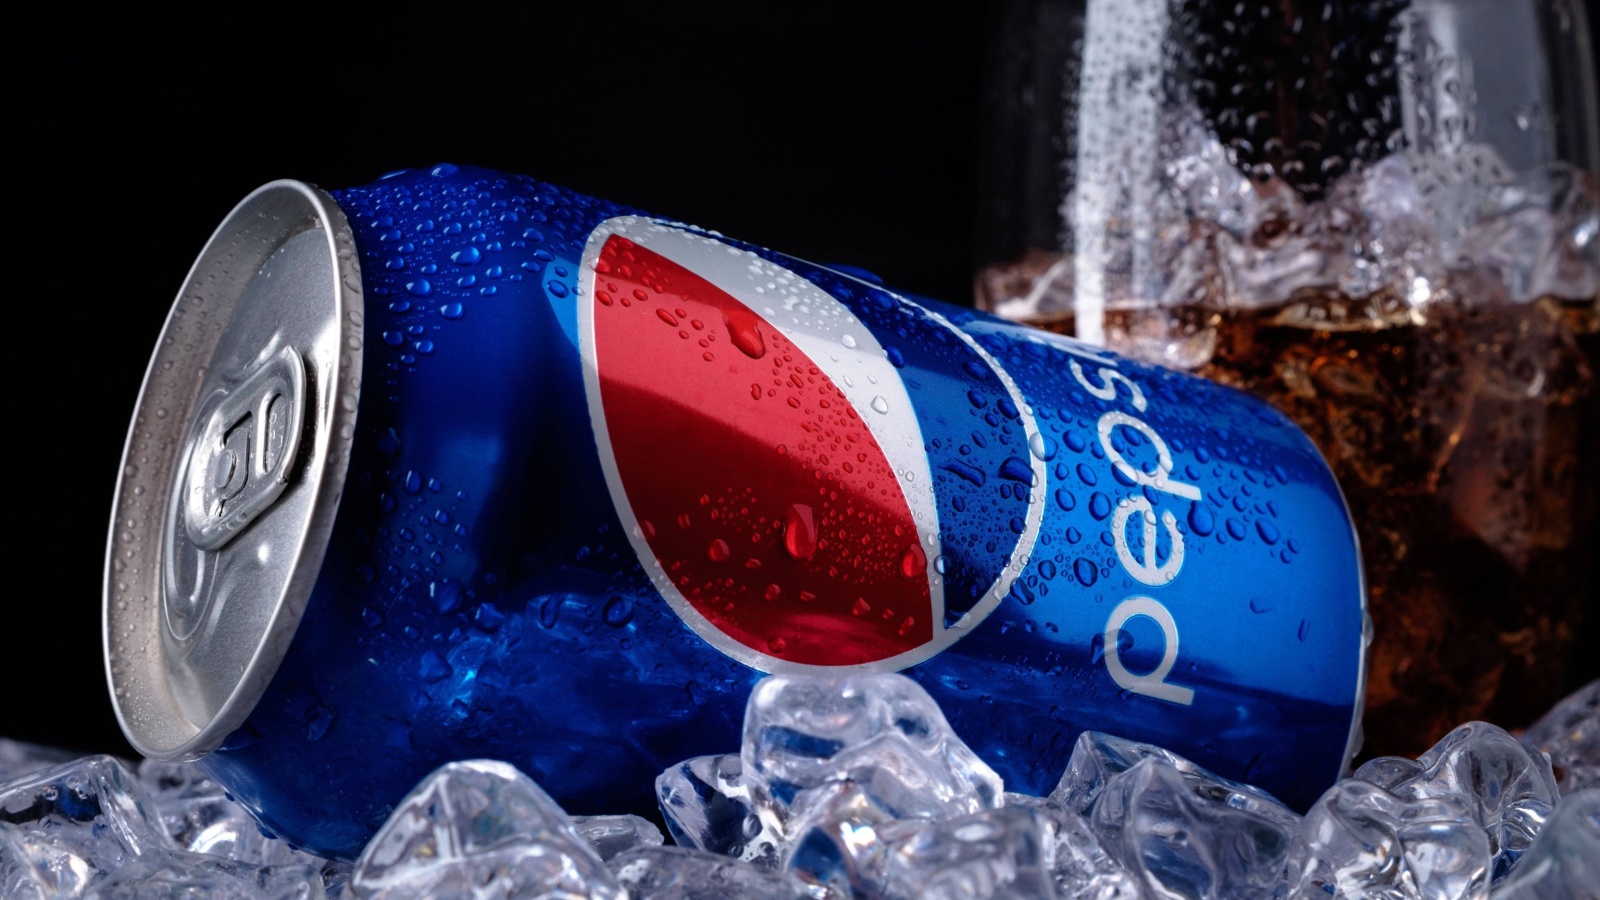 Pepsi advertisement screenshot #1 1600x900